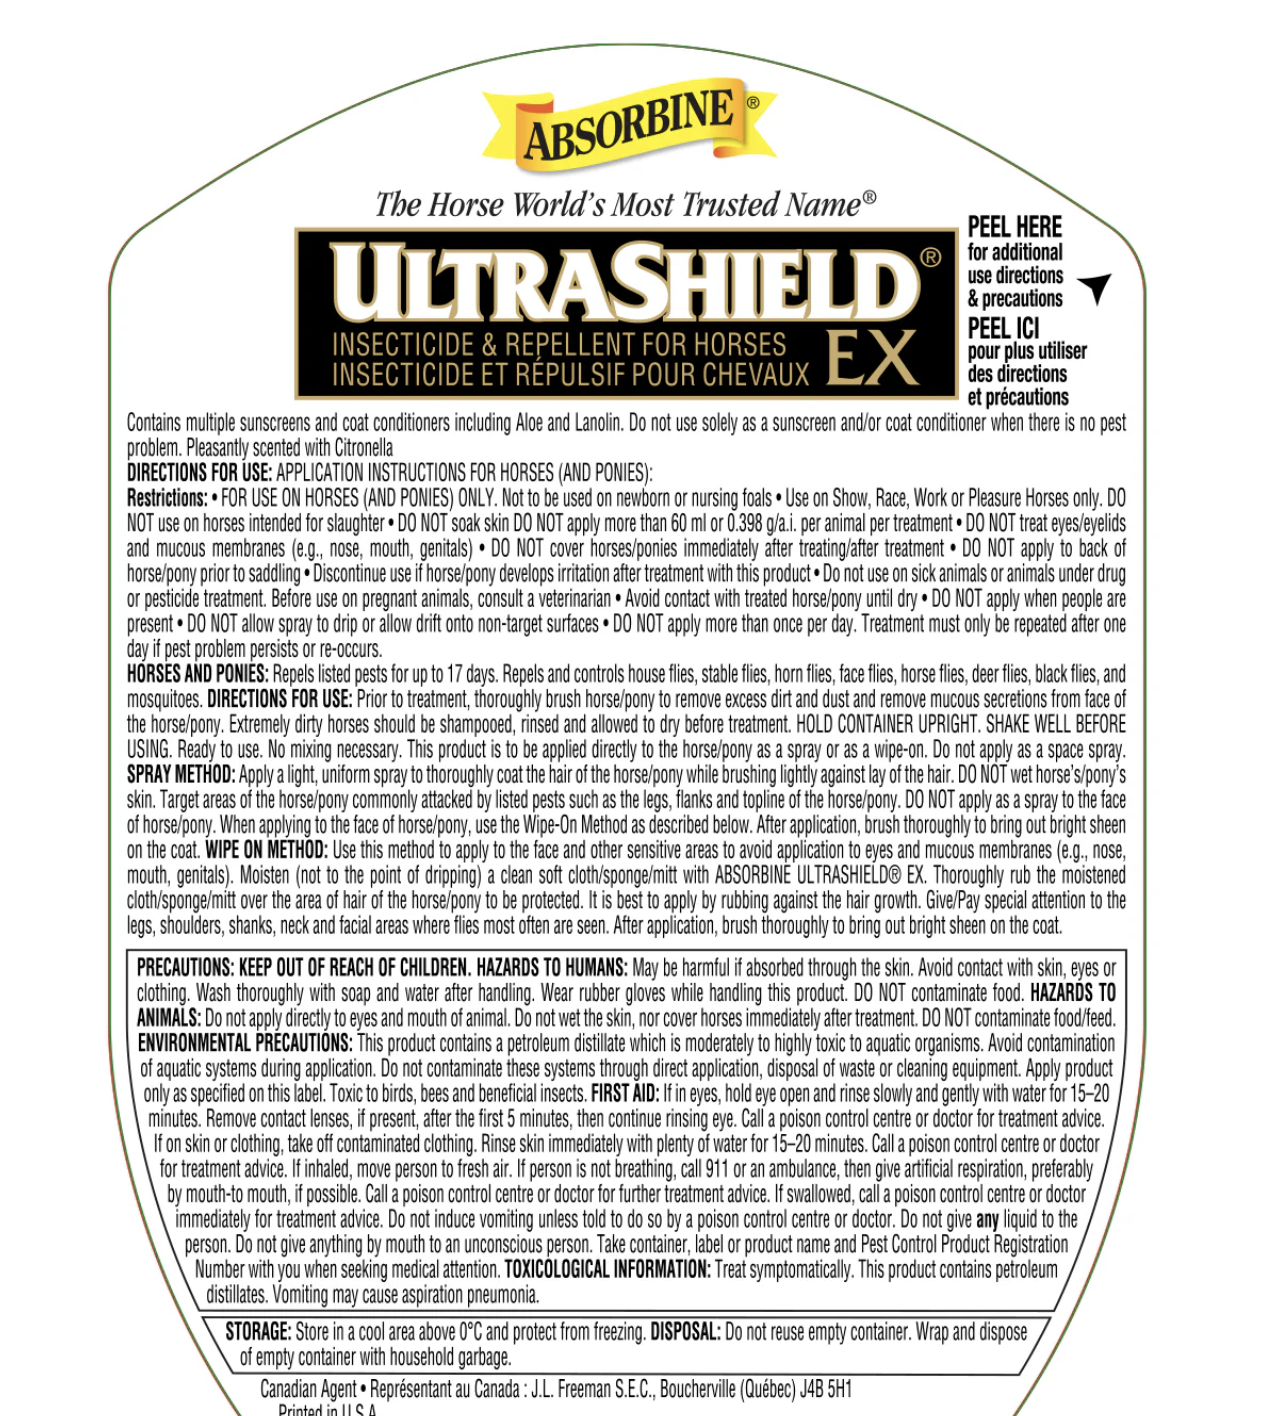 UltraShield EX Spray - 950 ml